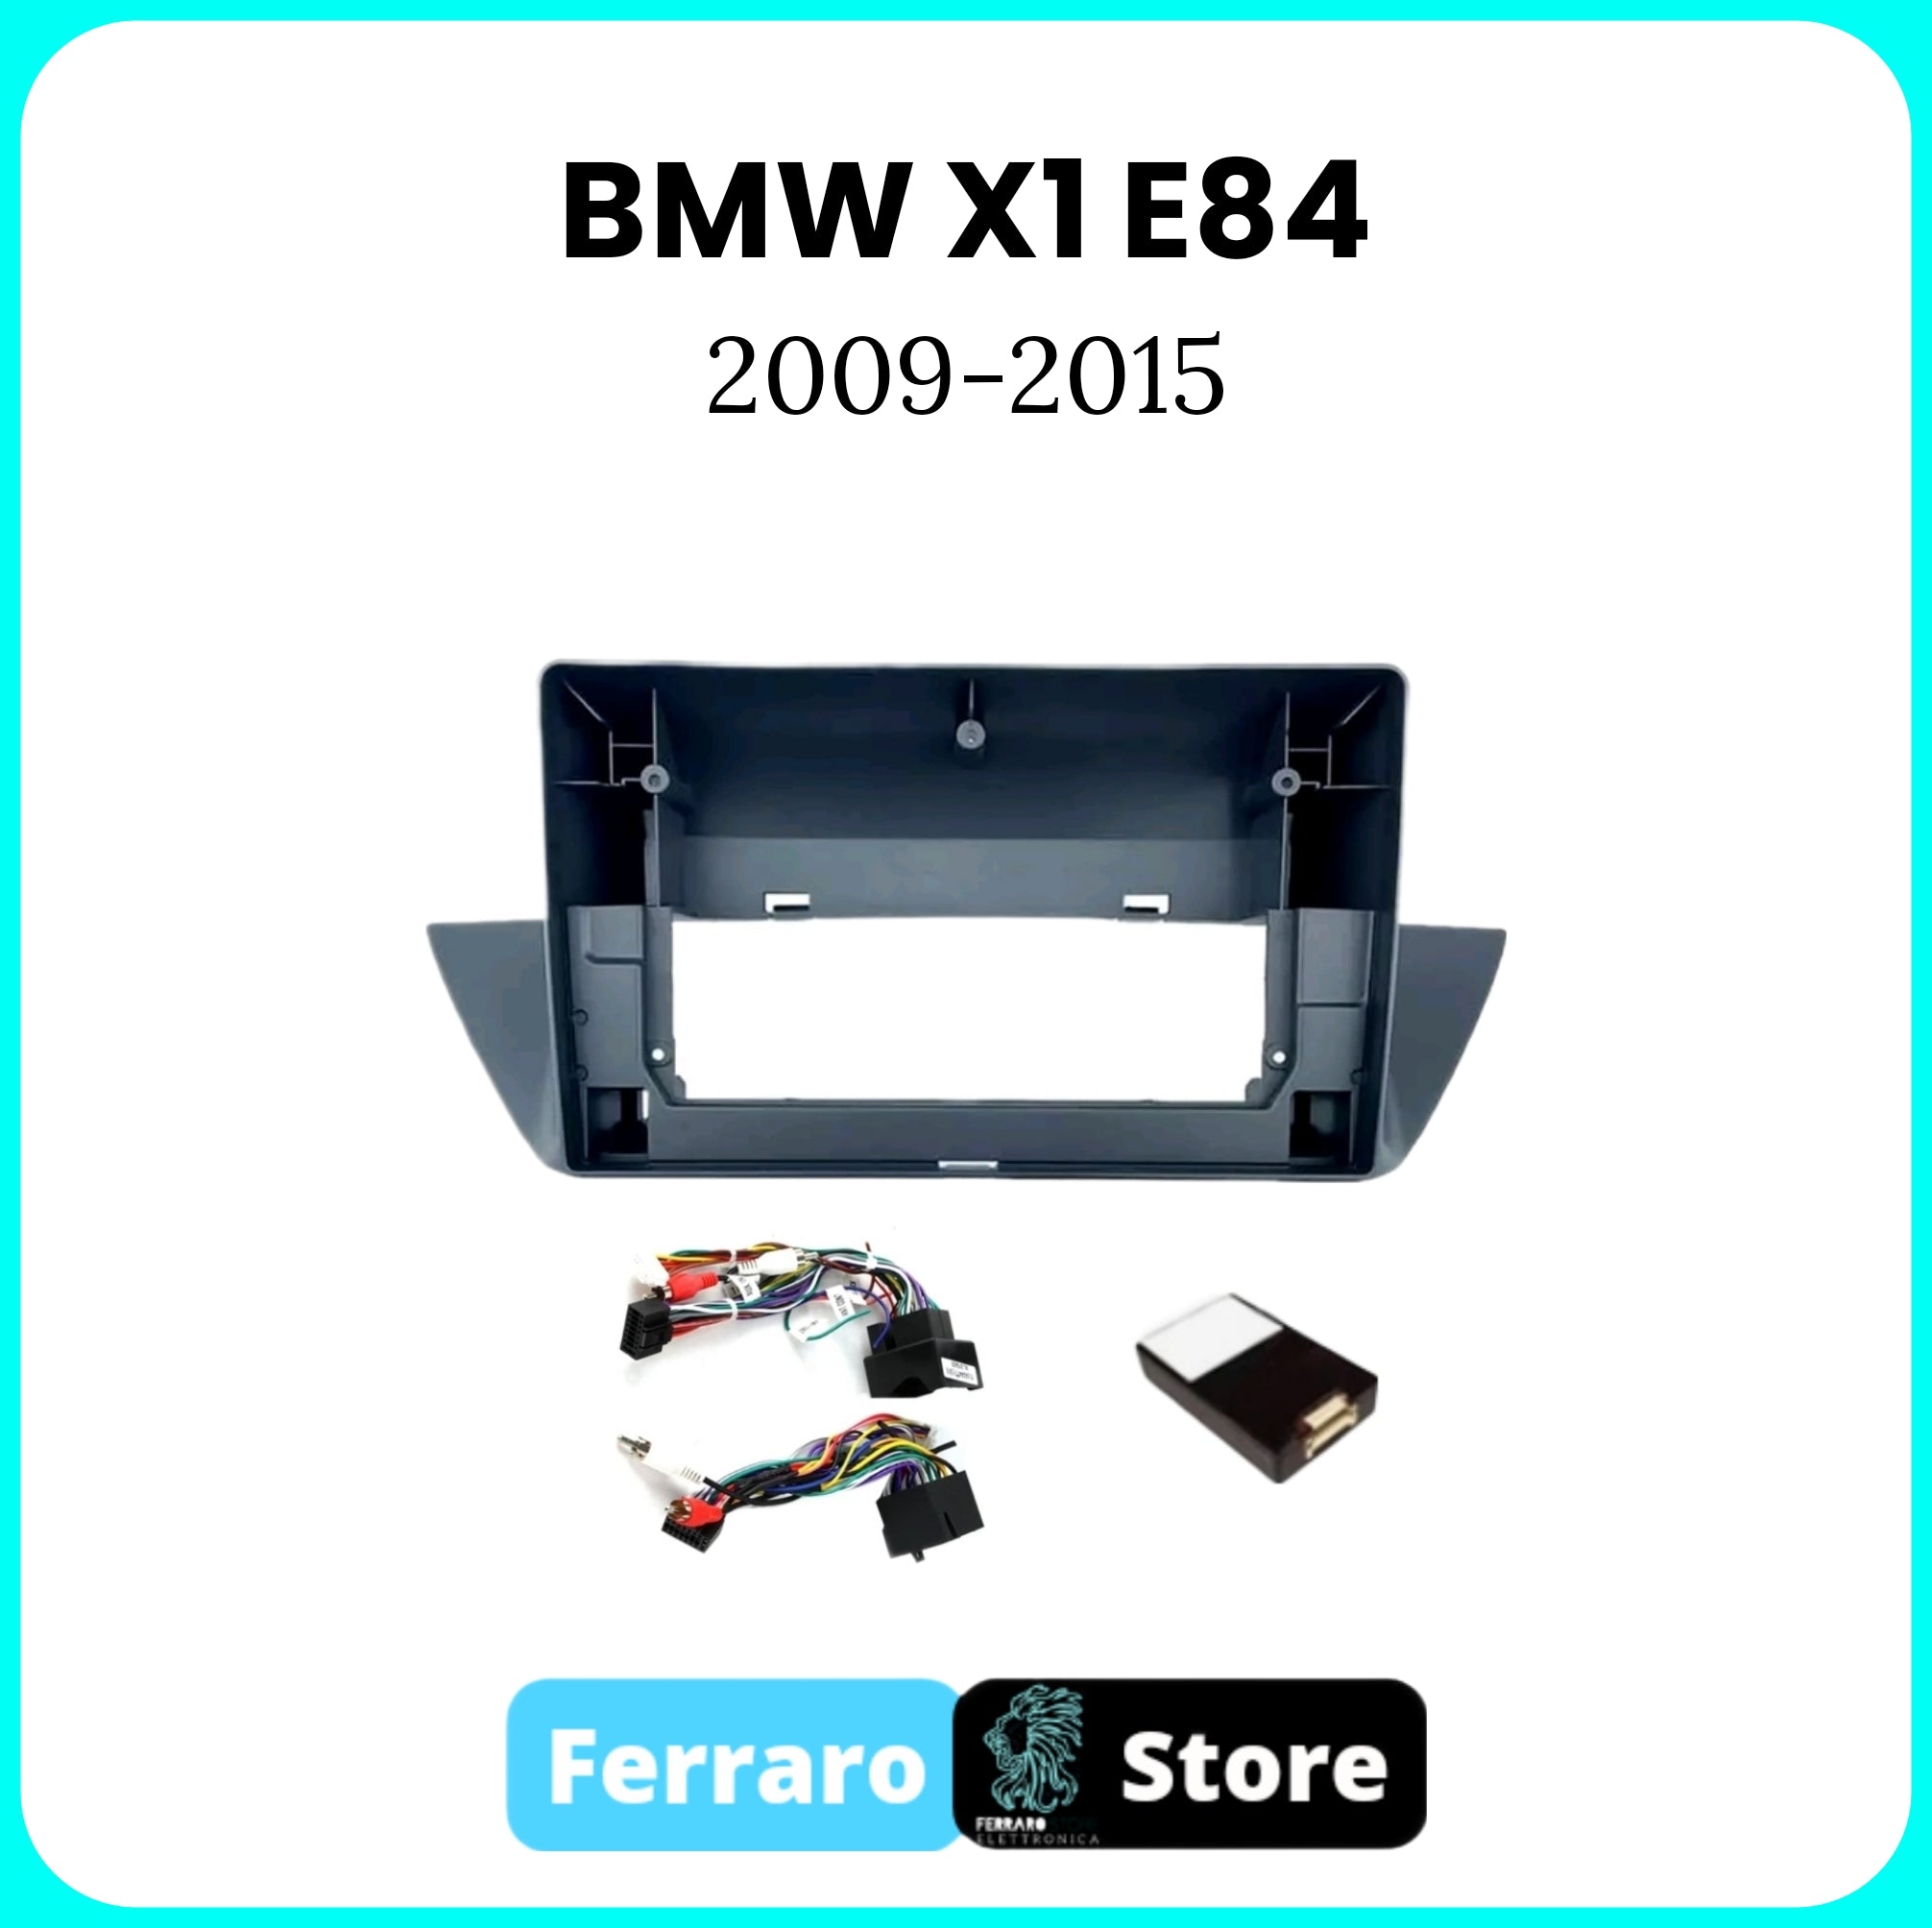 Kit Montaggio Autoradio 10.1"Pollici BMW X1 E84 [2009 - 2015] - Mascherina, Cablaggio Autoradio Android